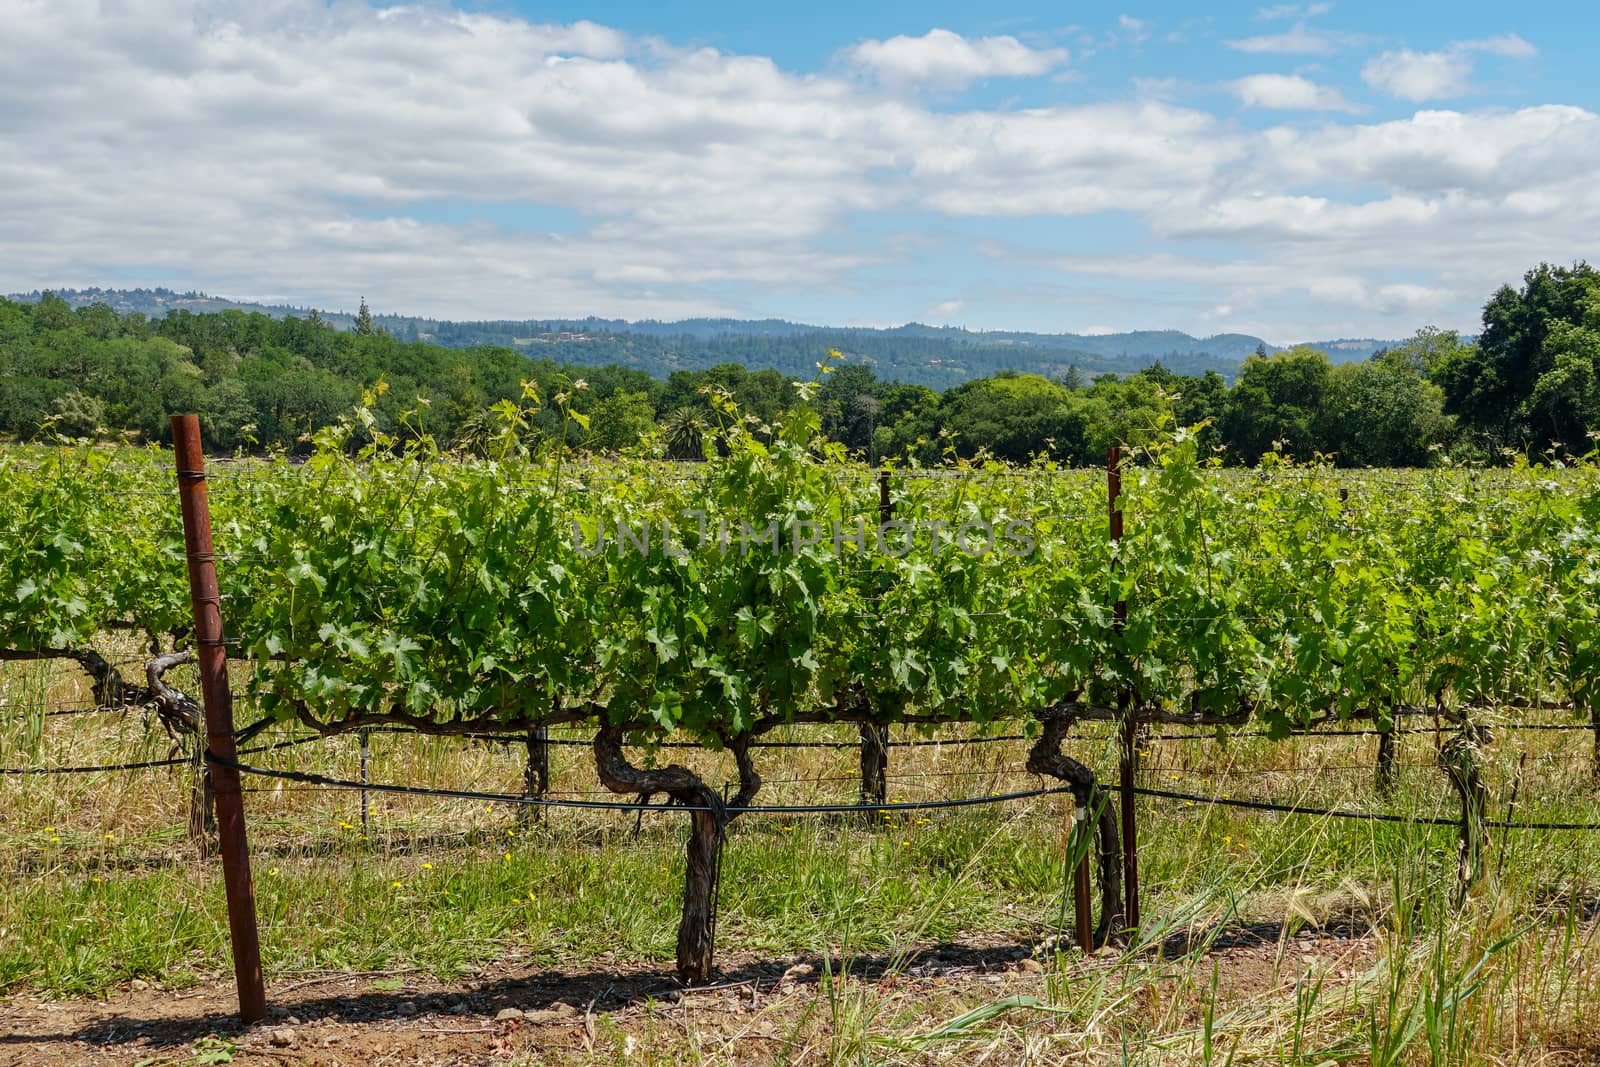 Vineyard in Napa Valley. Napa County, in California's Wine Country. Vineyards landscape.